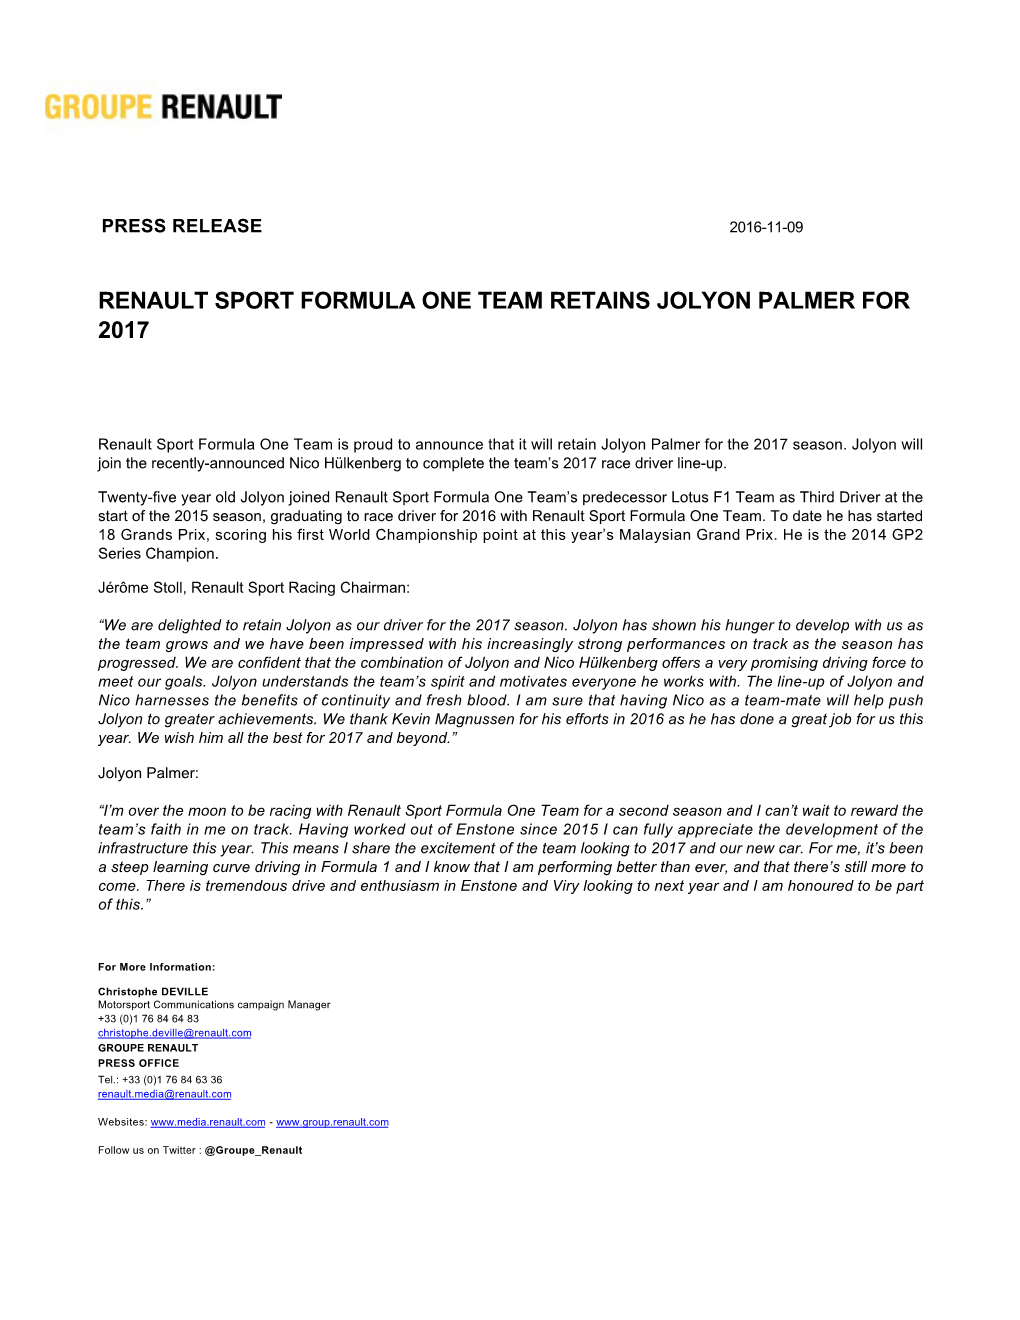 Renault Sport Formula One Team Retains Jolyon Palmer for 2017